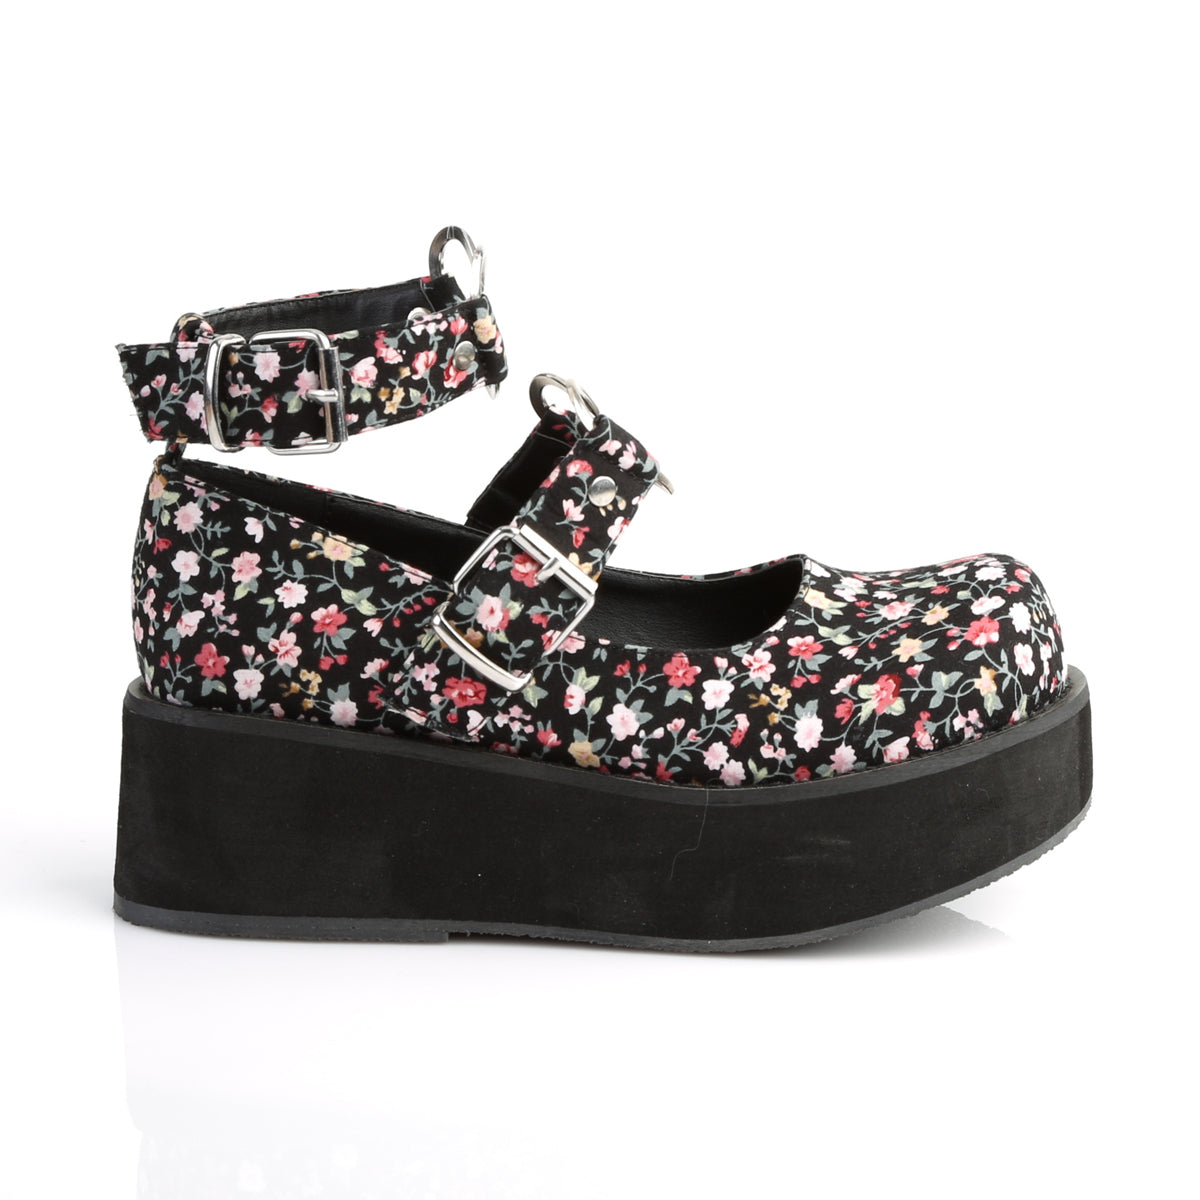 Demonia Sprite-02 Floral design shoes